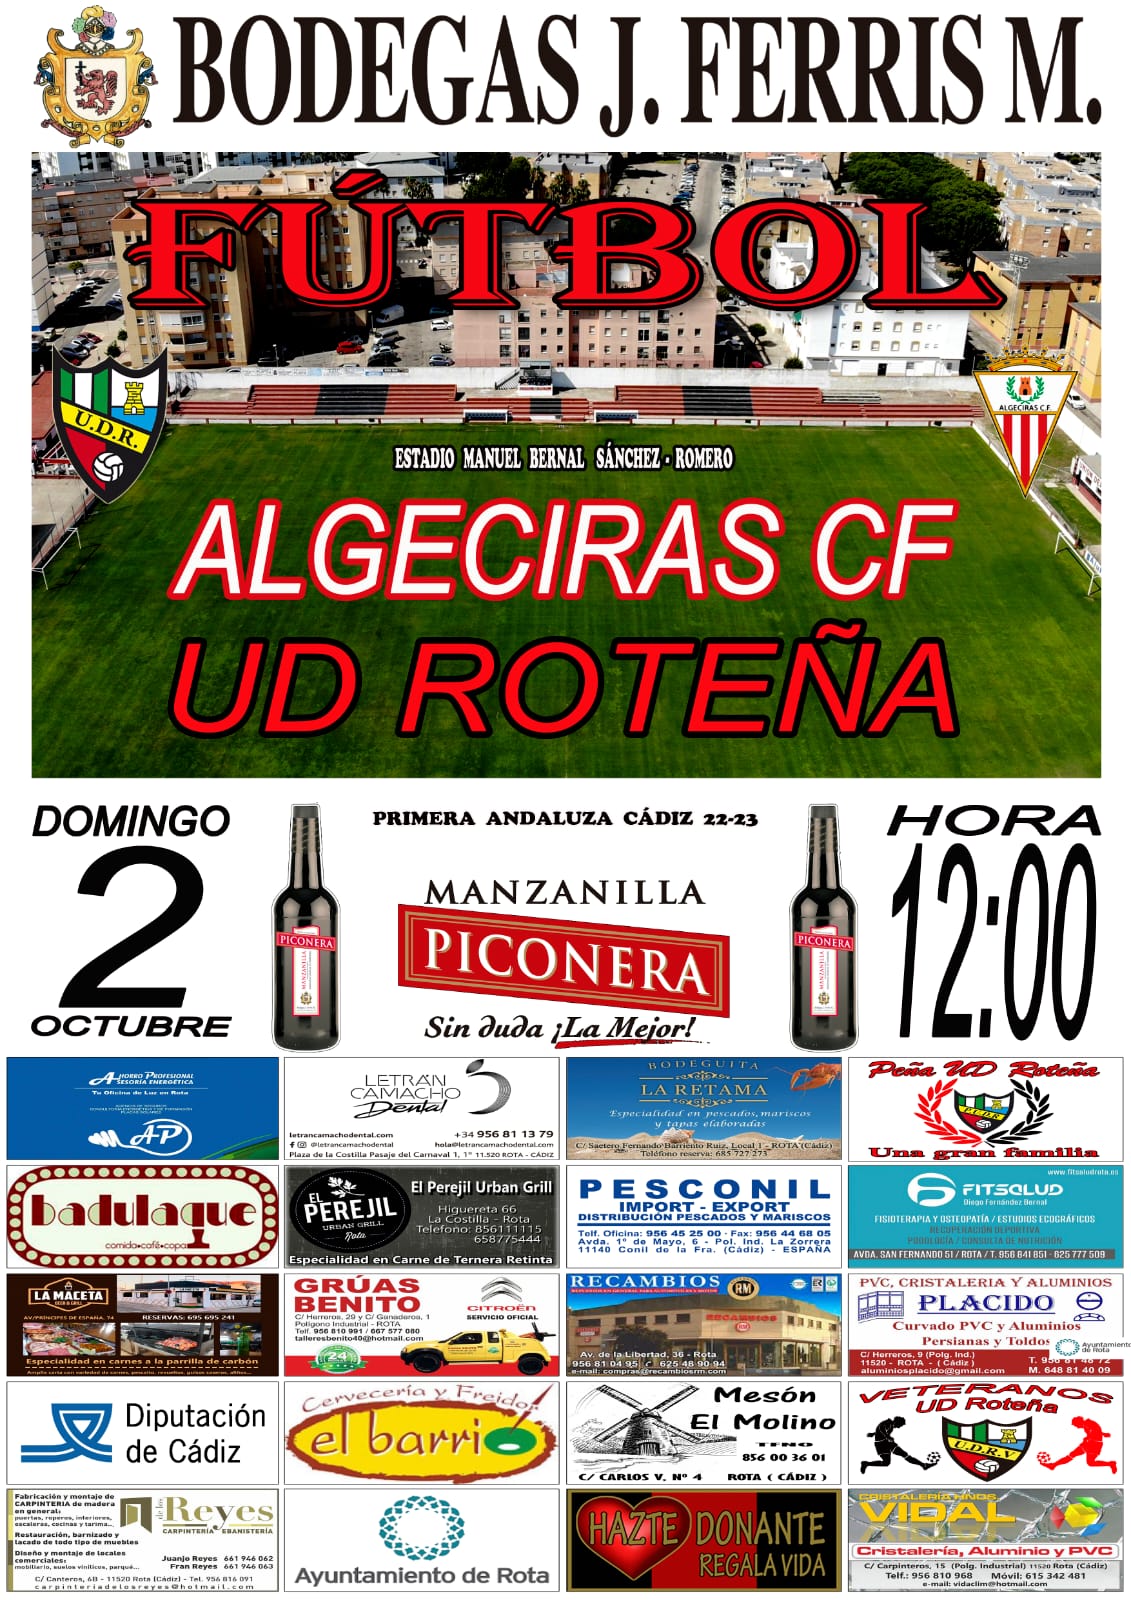 UD Roteña - Algeciras CF B